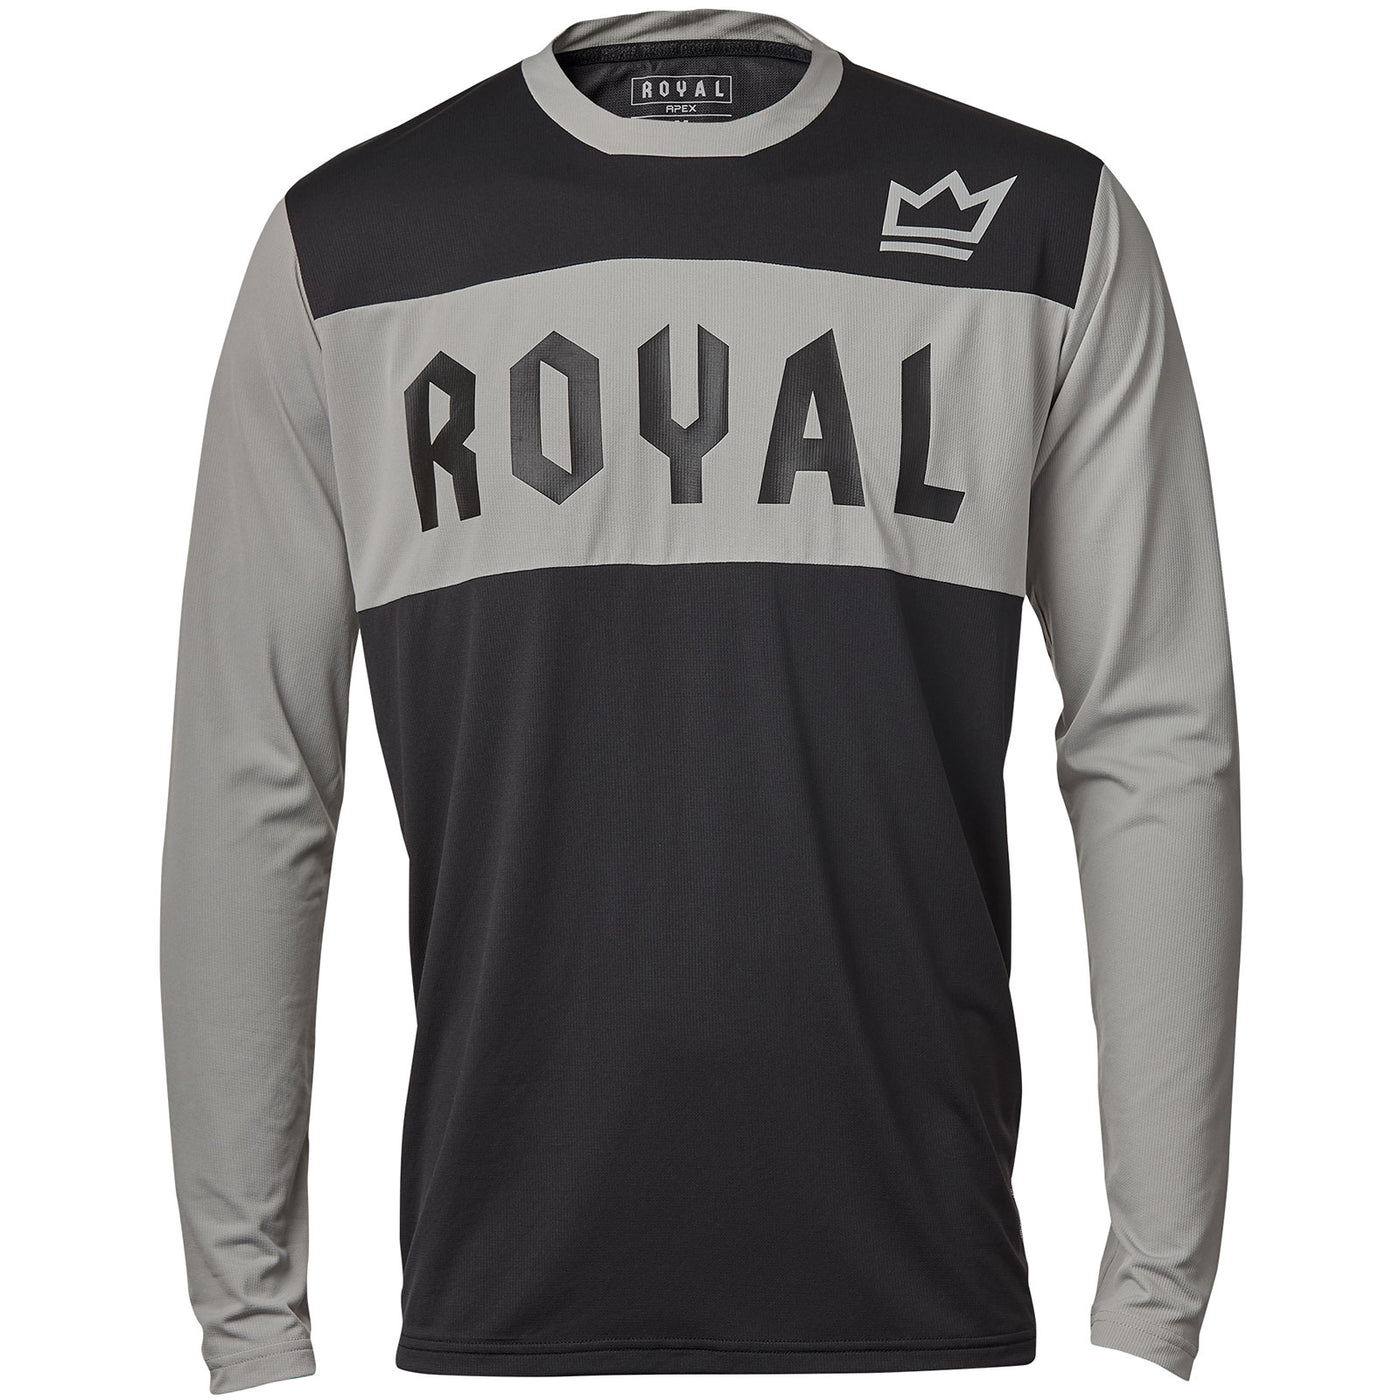 Royal Racing Apex Jersey LS - Grey/Black